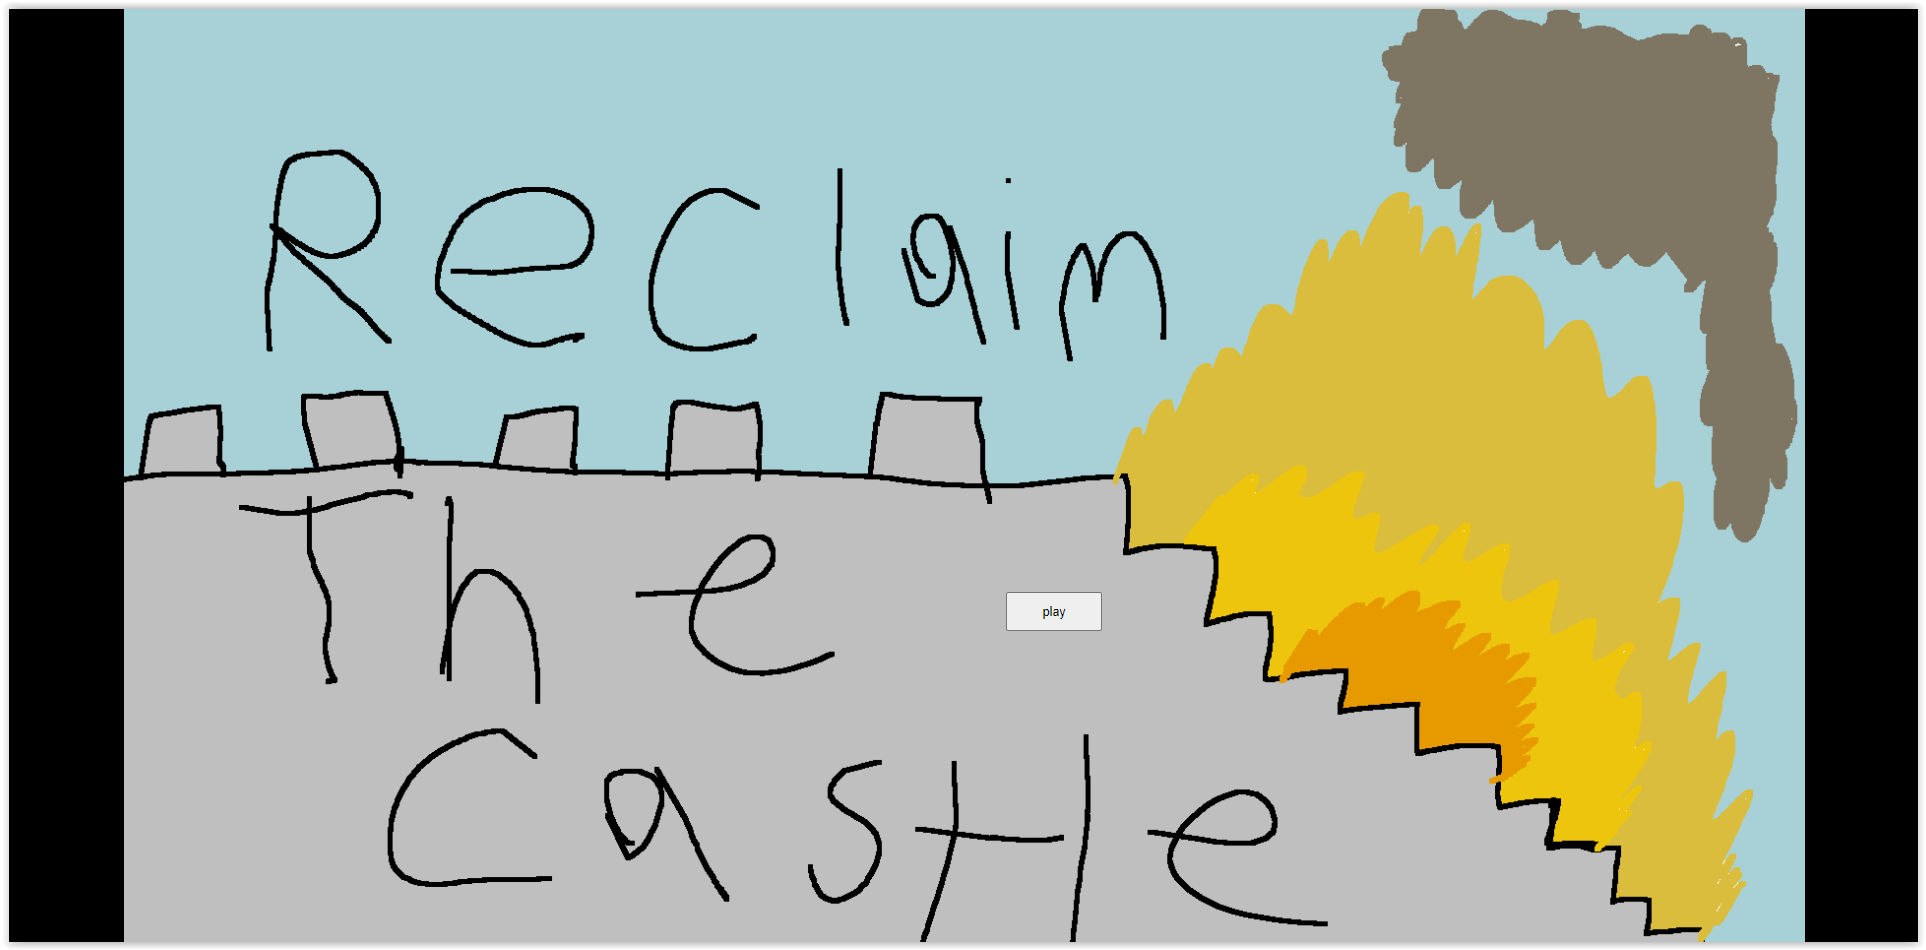 Recalaim the Castle